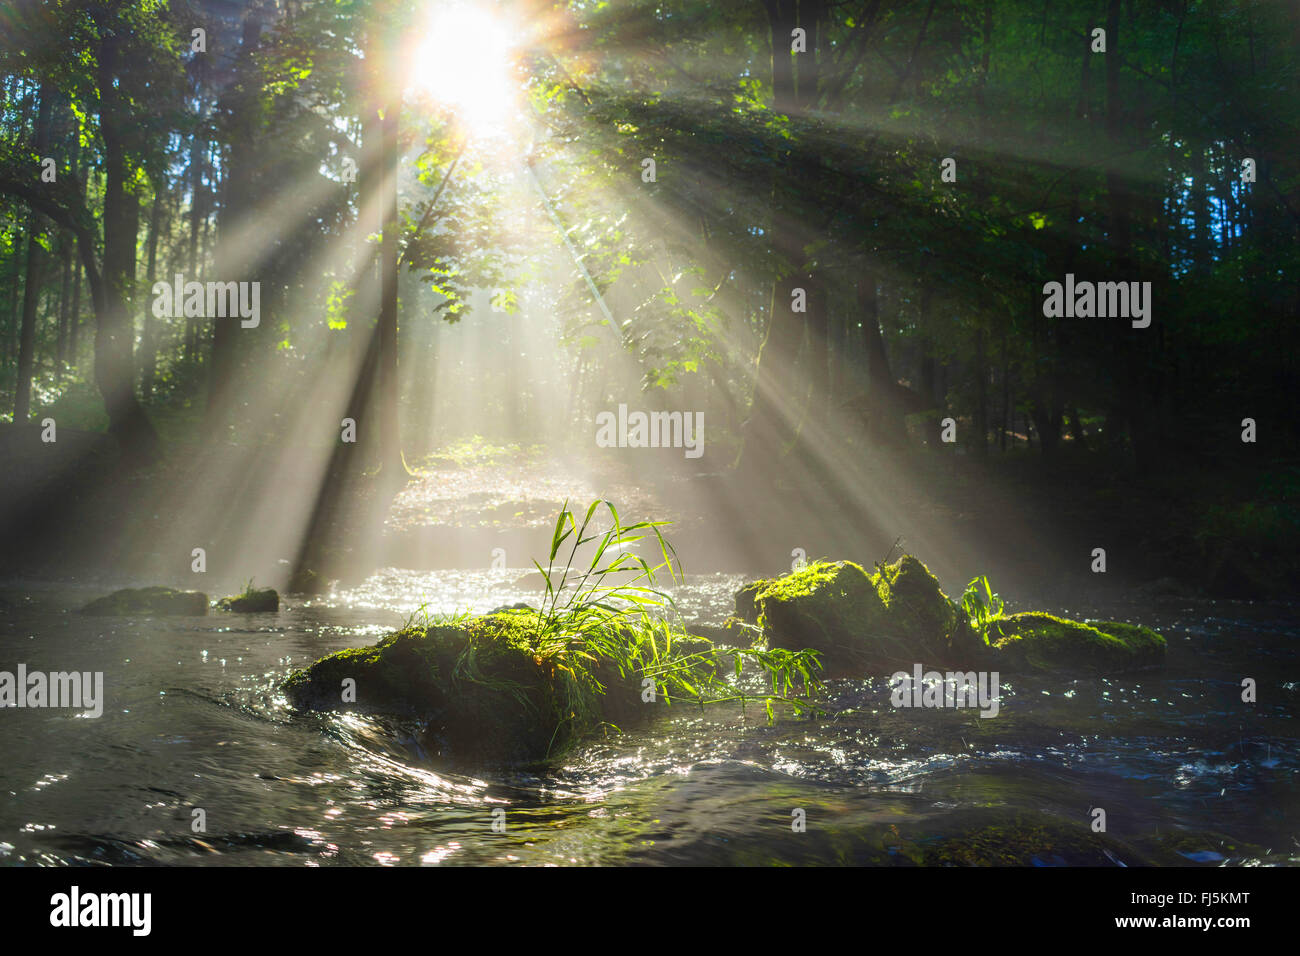 Mossy rocks ina brook with sun beams, Germany, Saxony, Vogtlaendische Schweiz, Triebtal Stock Photo